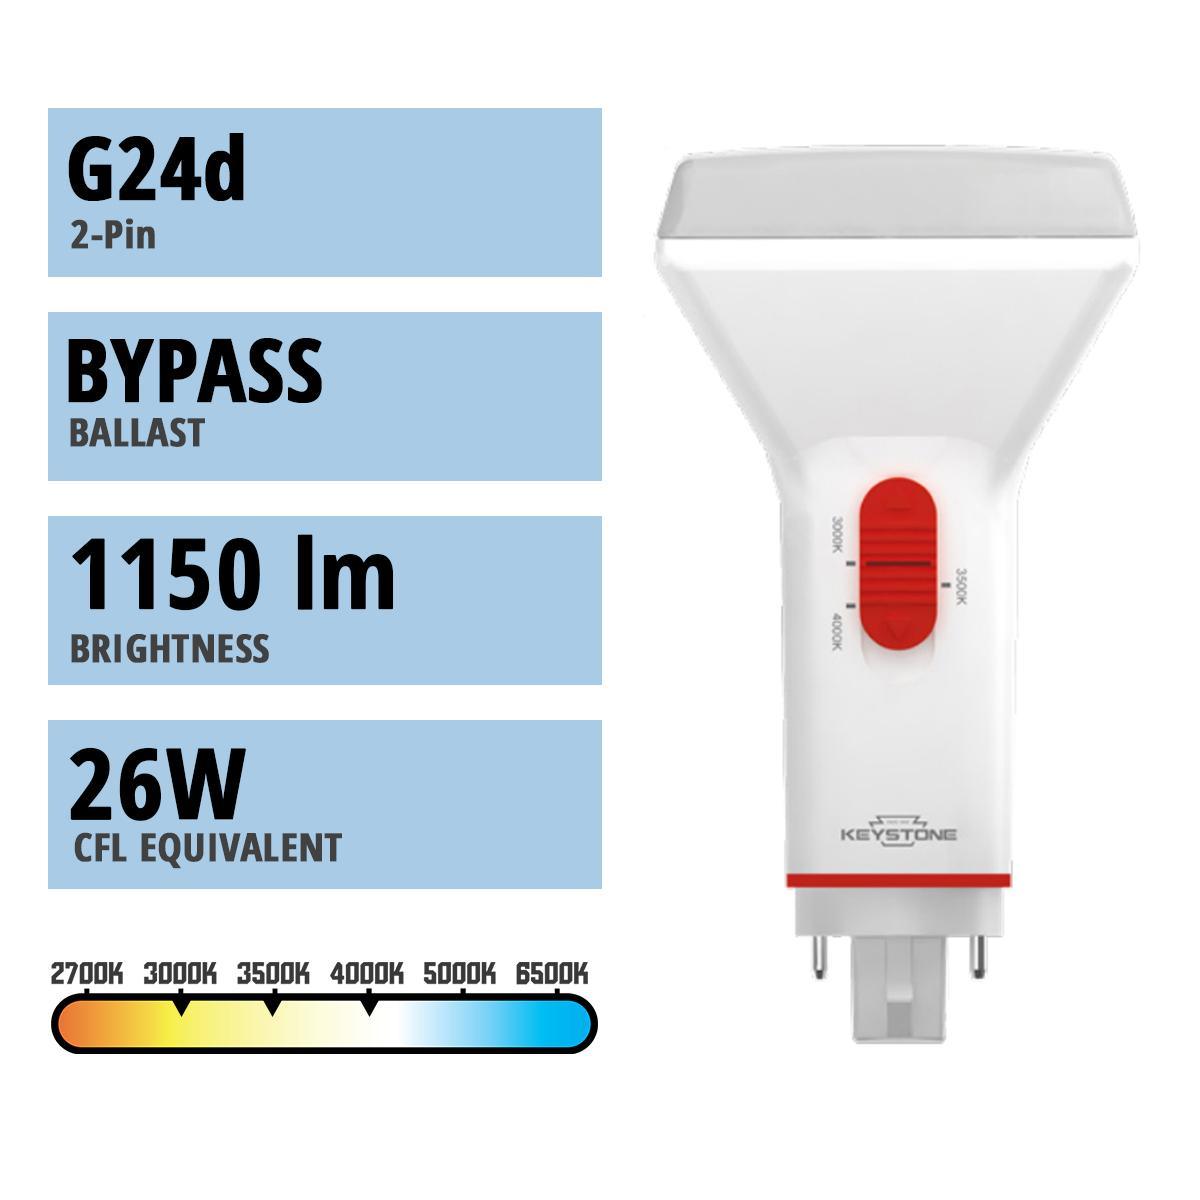 2 Pin PL LED Bulb, 8.5 Watt 1150 Lumens, Selectable CCT 27K/40K/50K, Vertical, Replaces 26W CFL, G24d Base, Tybe B Ballast Bypass